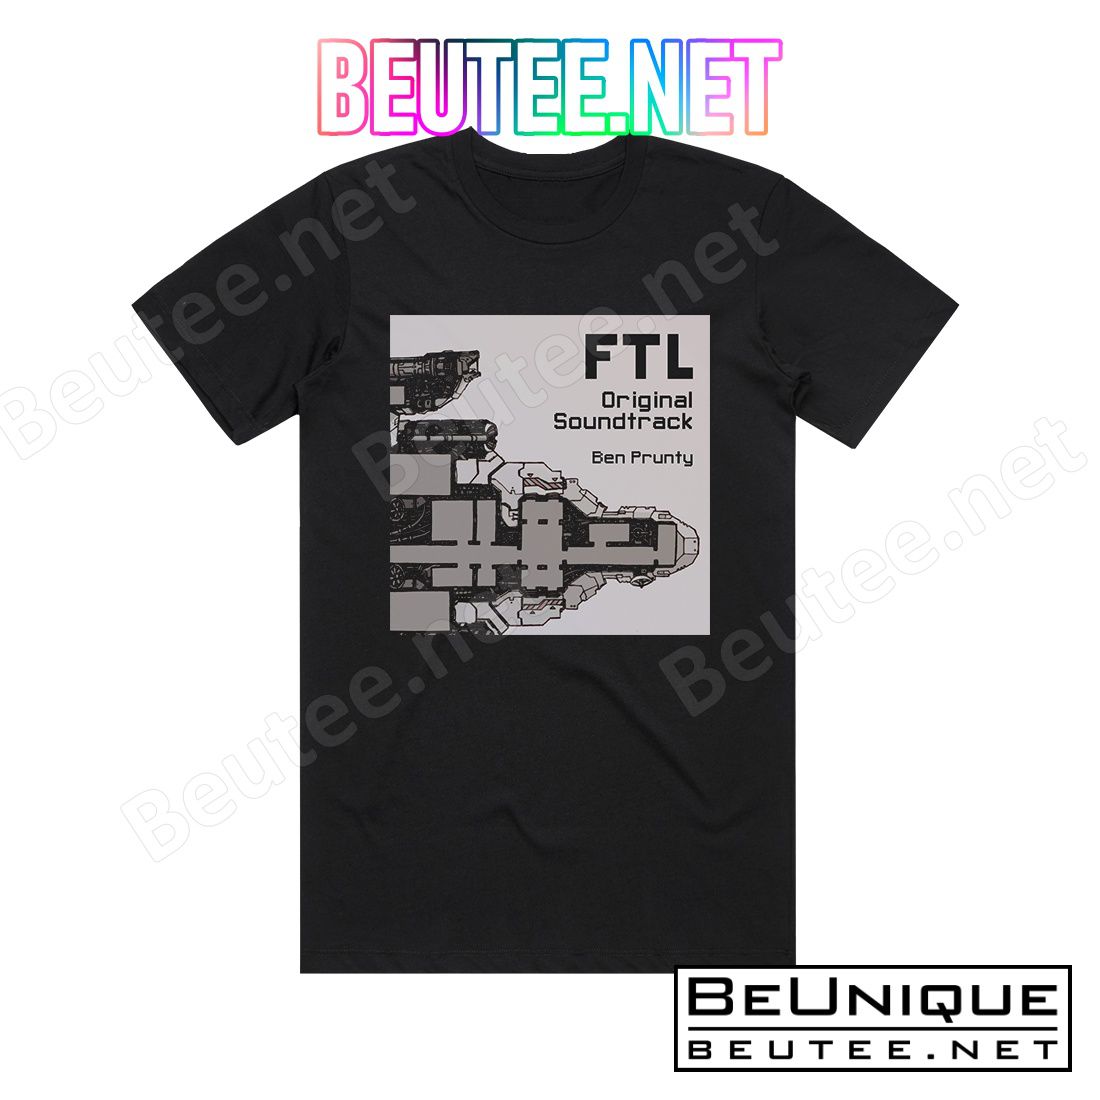 Ben Prunty Ftl Original Soundtrack Album Cover T-Shirt